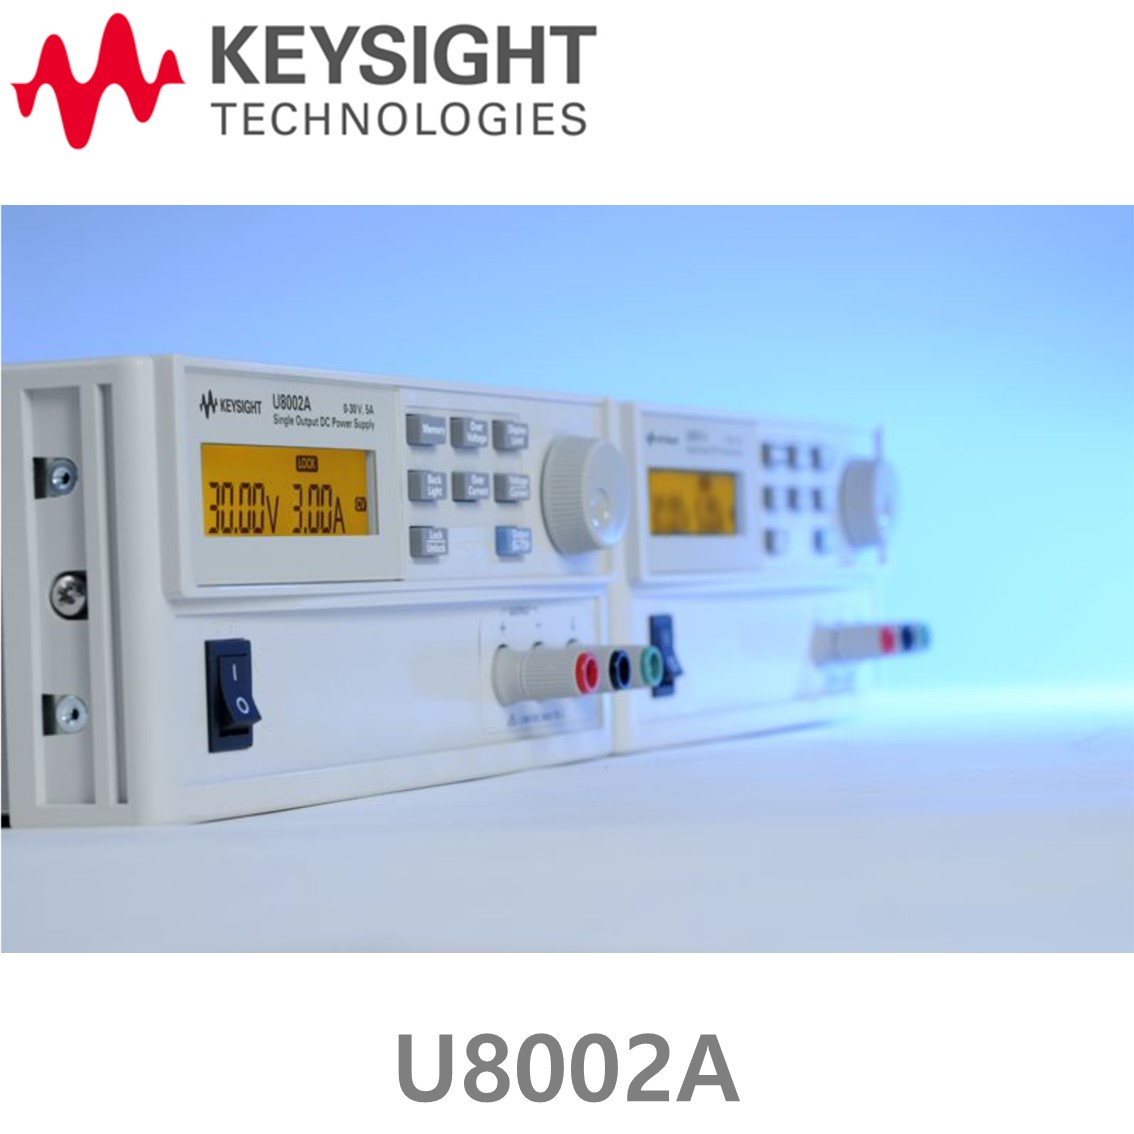 [ KEYSIGHT U8002A ] 키사이트 DC파워서플라이 150W 30V/5A, DC전원공급기